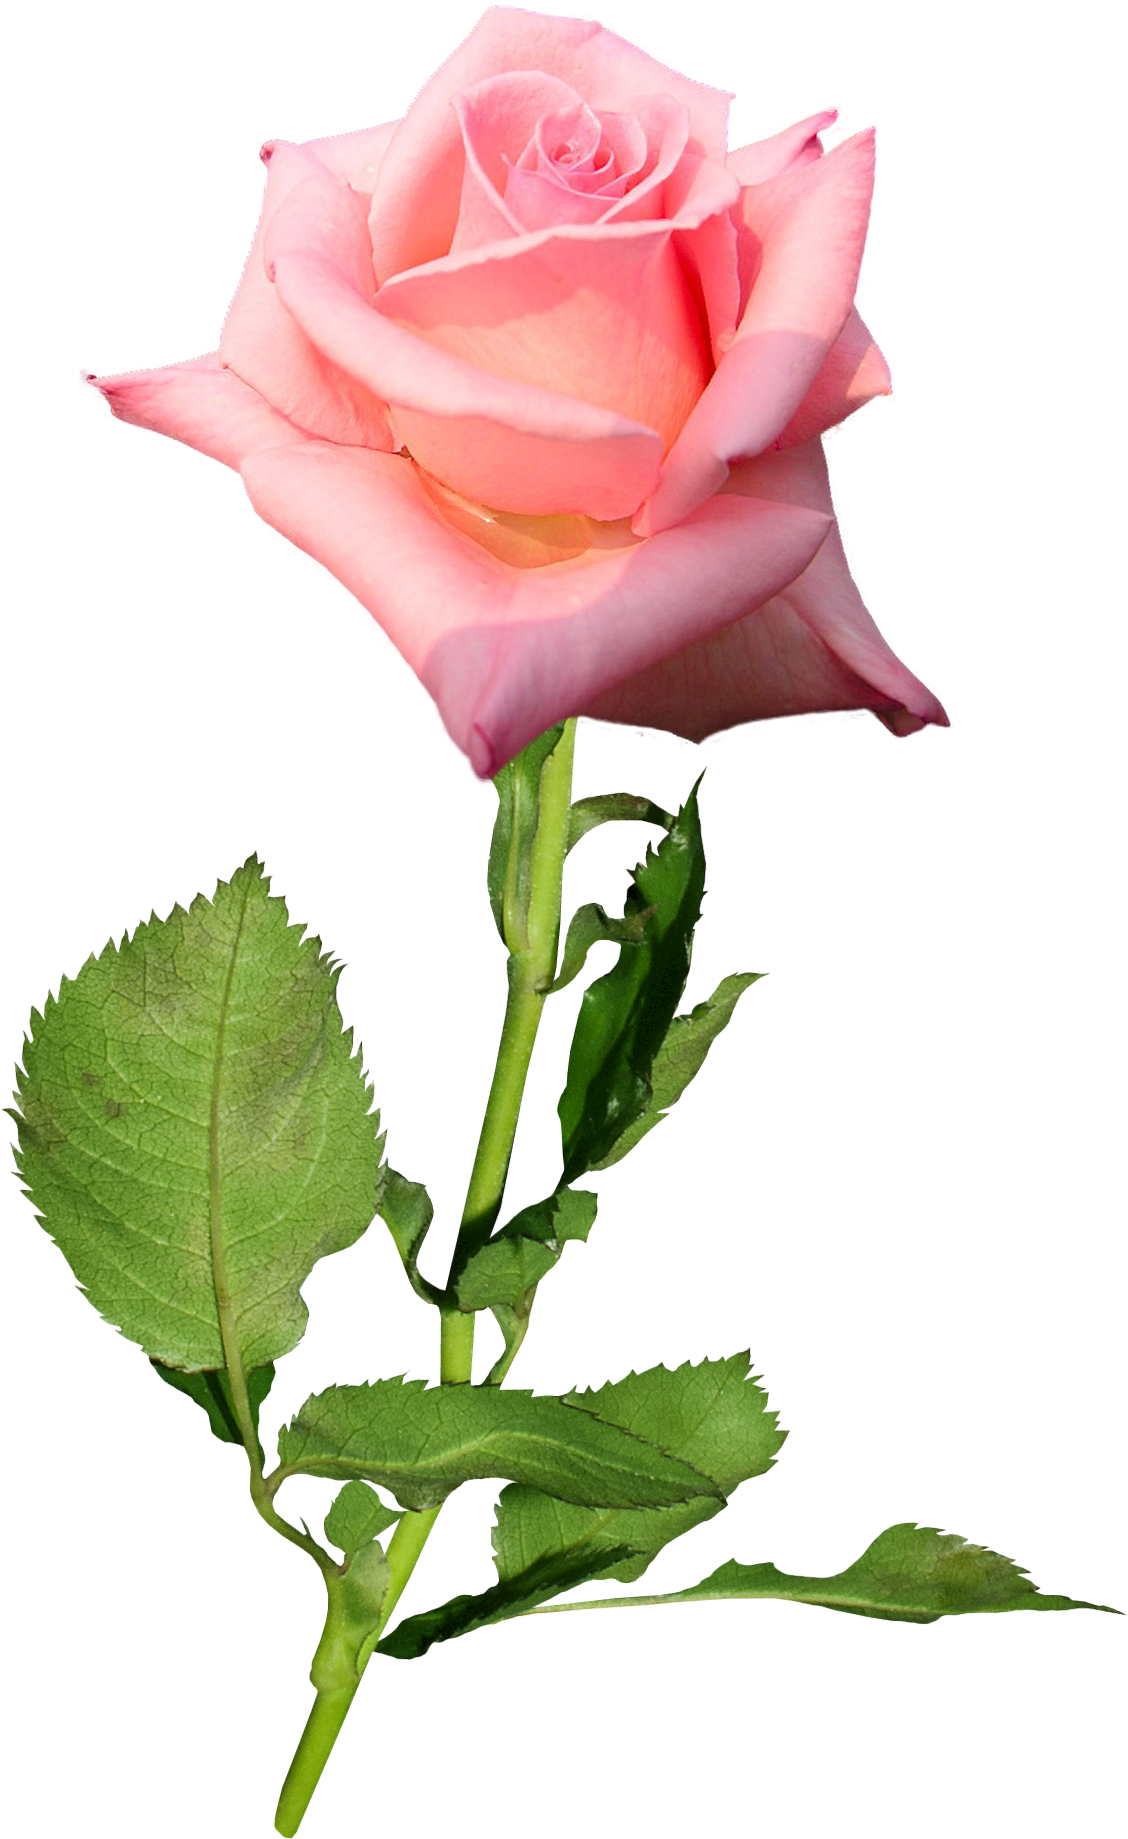 Garden Roses Flower Hybrid Tea Rose Bud - Розы Png На Прозрачном Фоне (1187x1901)